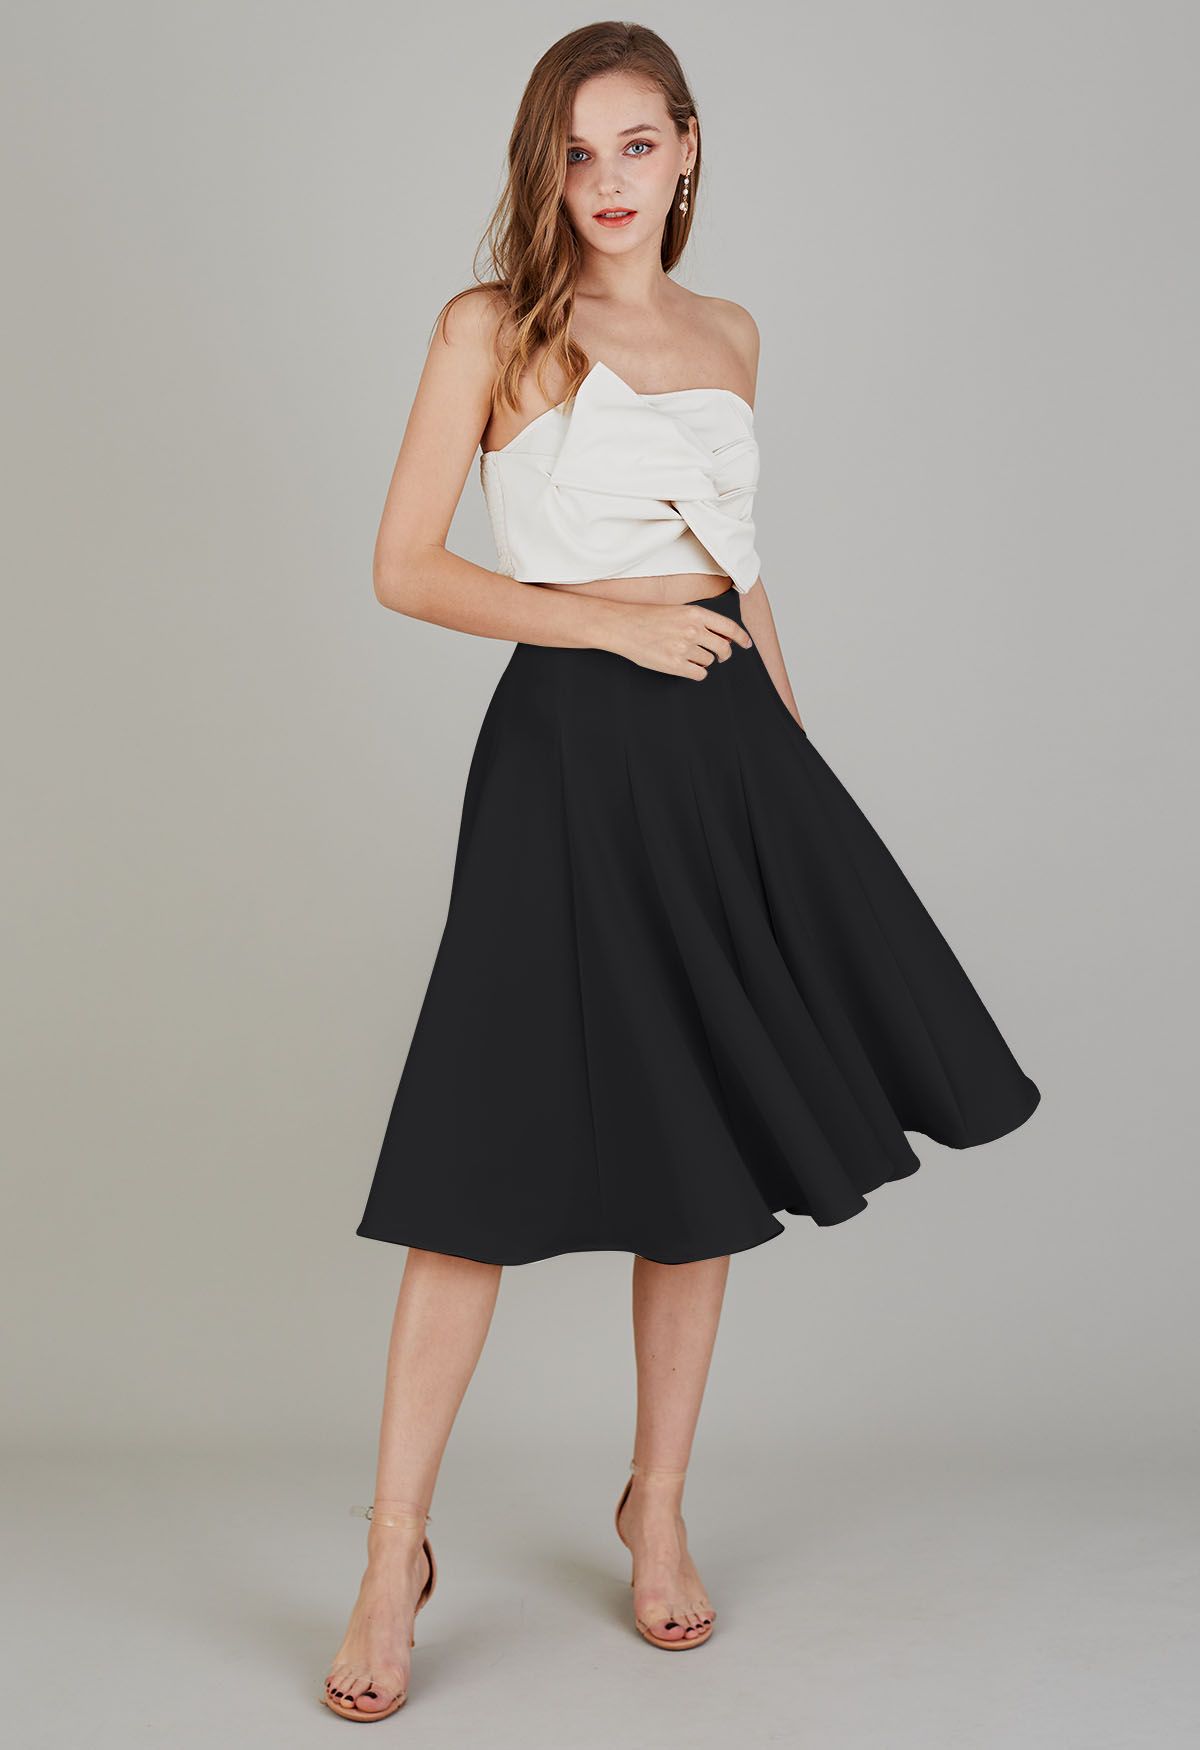 Graceful Flare Silhouette Skirt in Black